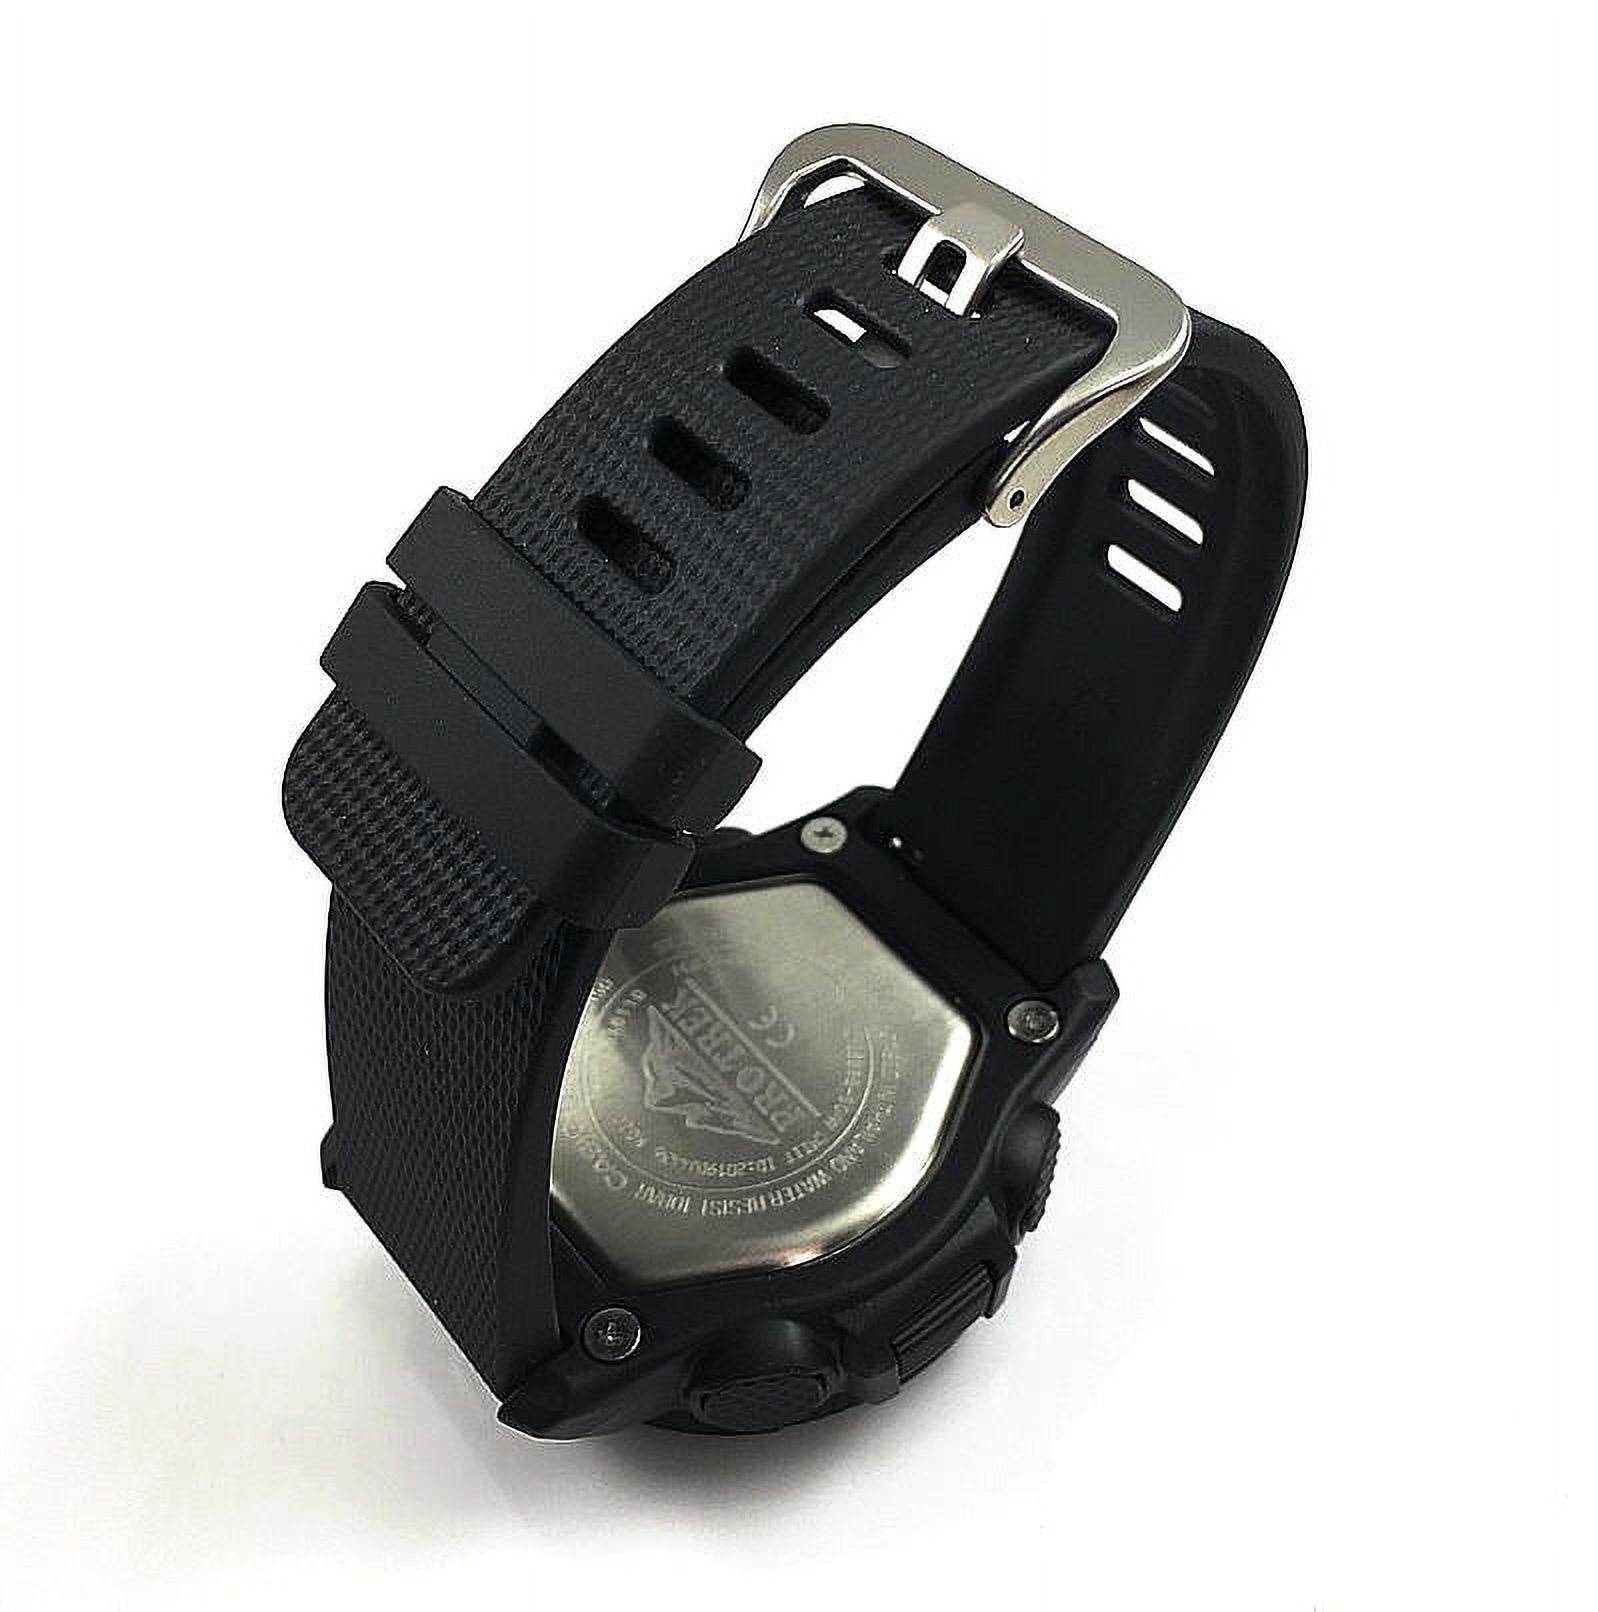 Casio Men's Pro Trek Quad Sensor with Bluetooth Smart Connect, Black - image 3 of 4